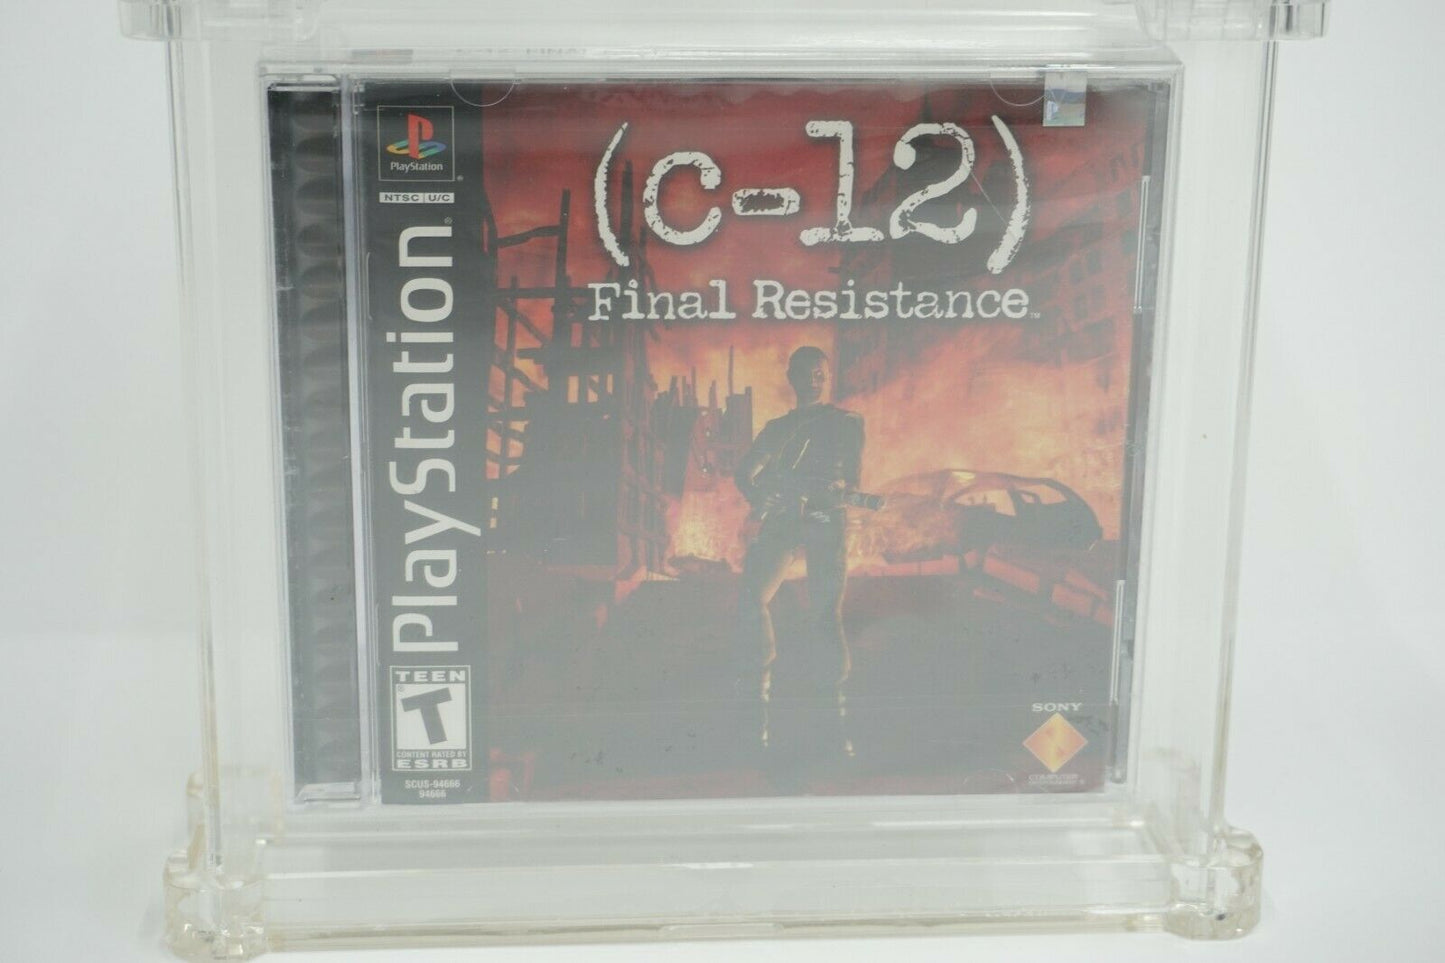 Graded - Ps1 C-12 Final Resistance Wata 8.5 B+ VGA Brand New Playstation 1